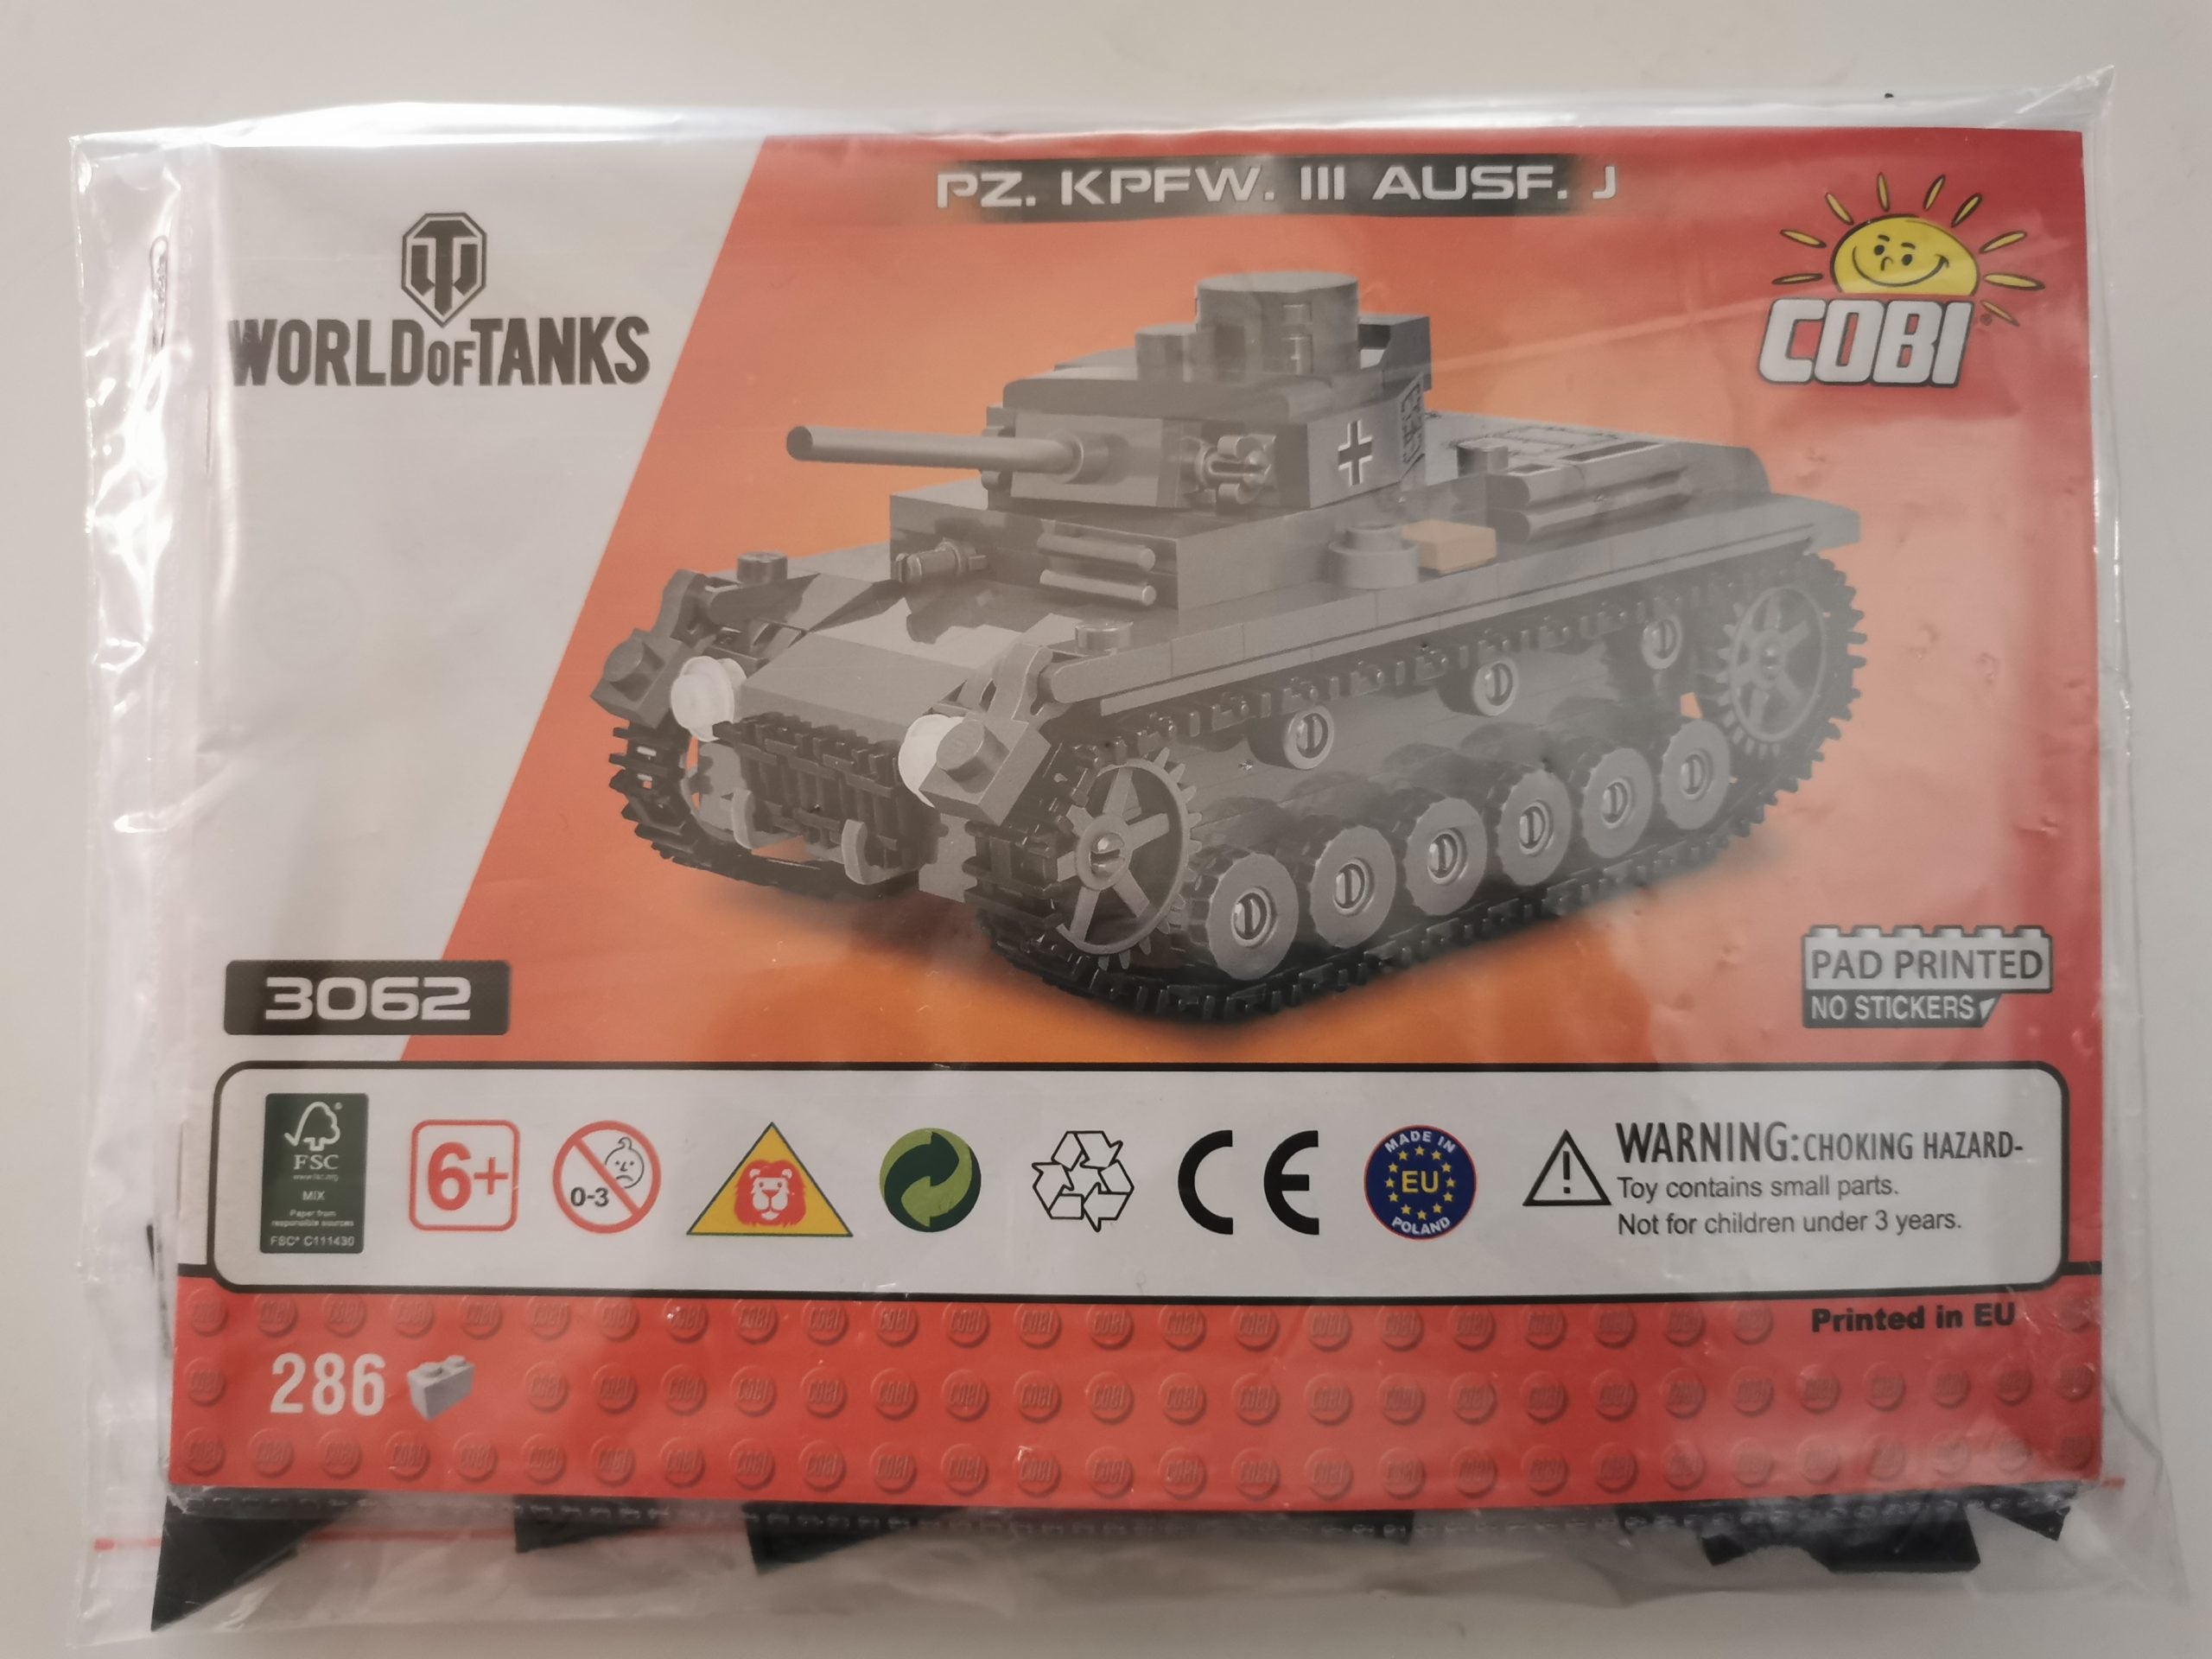 Cobi 3062 PZ. KPWF. III Ausf. J (1:48) (World of Tanks) used